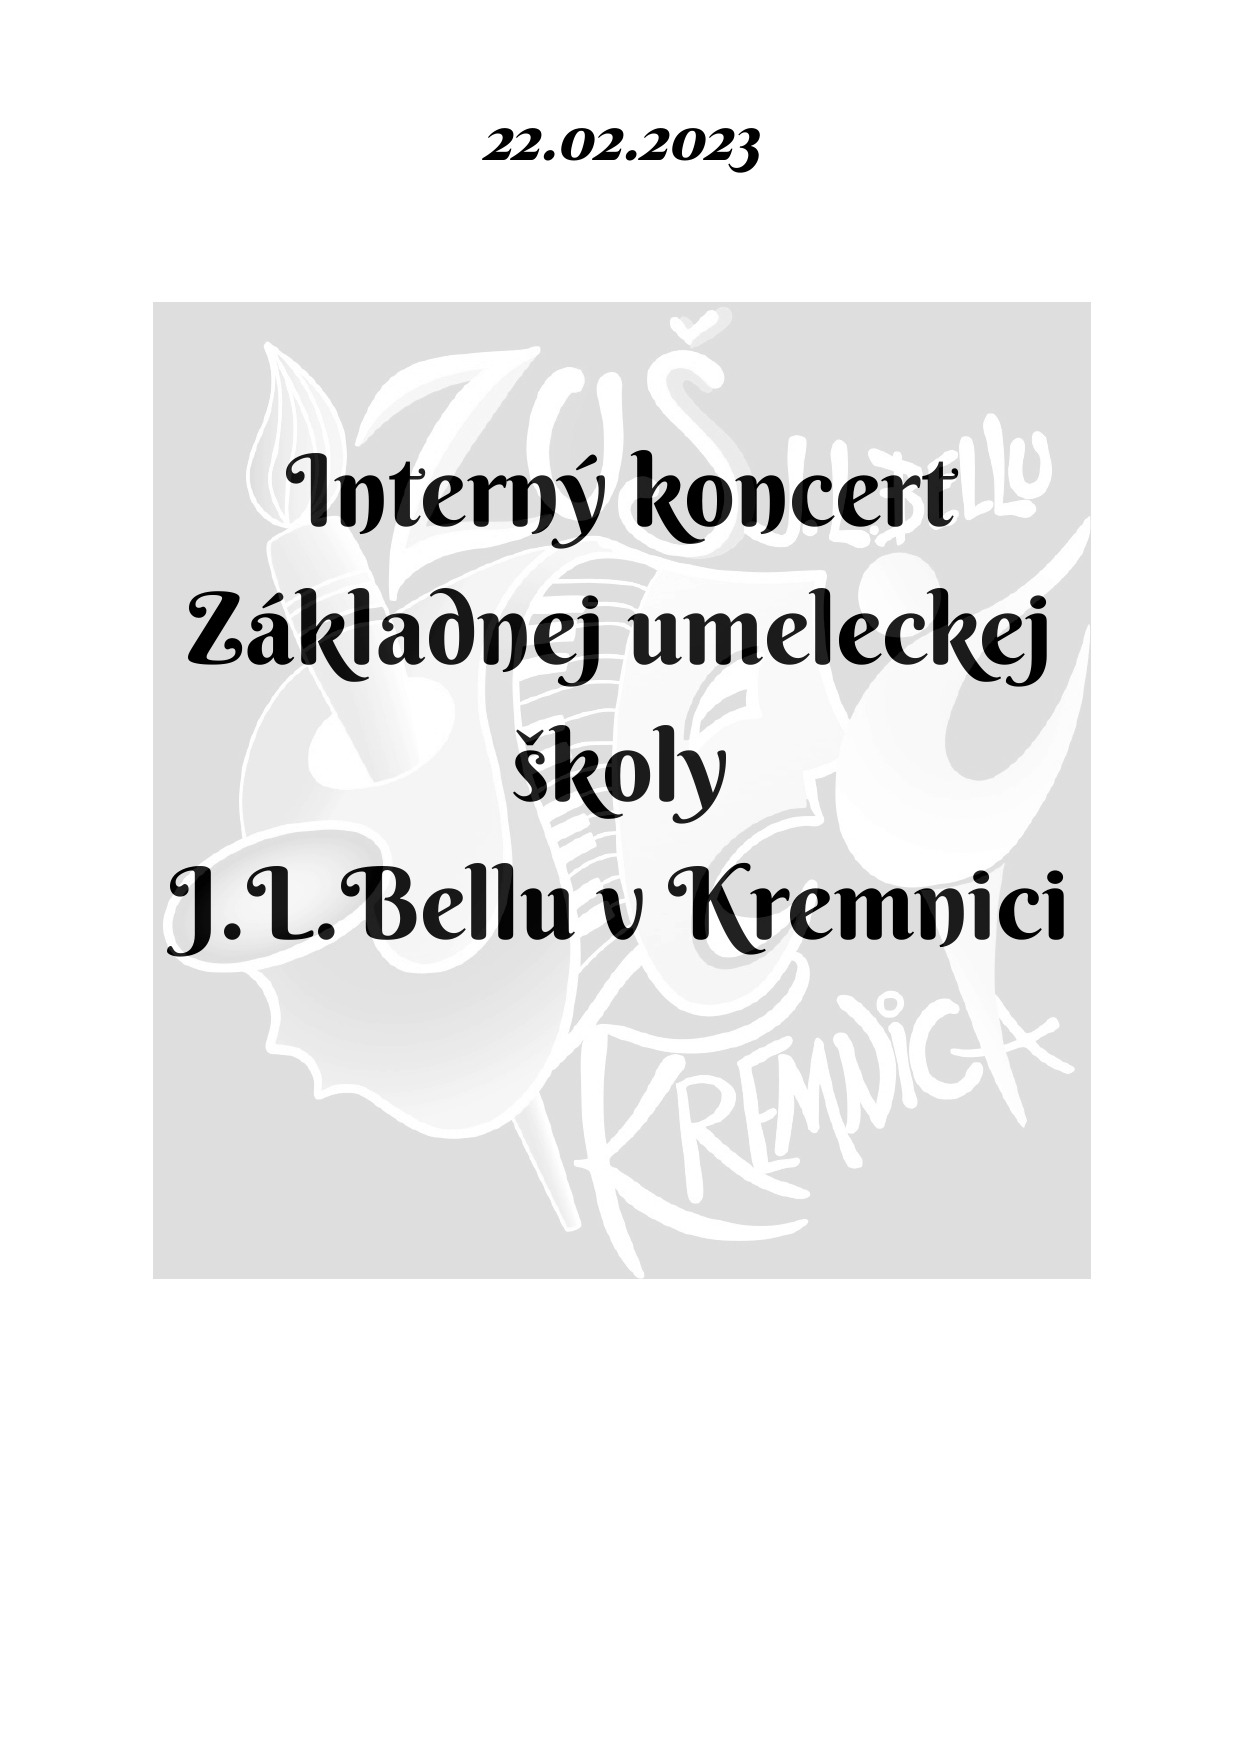 Pozvánka na online interný koncert dnes 22.02. o 17:00 - Obrázok 1